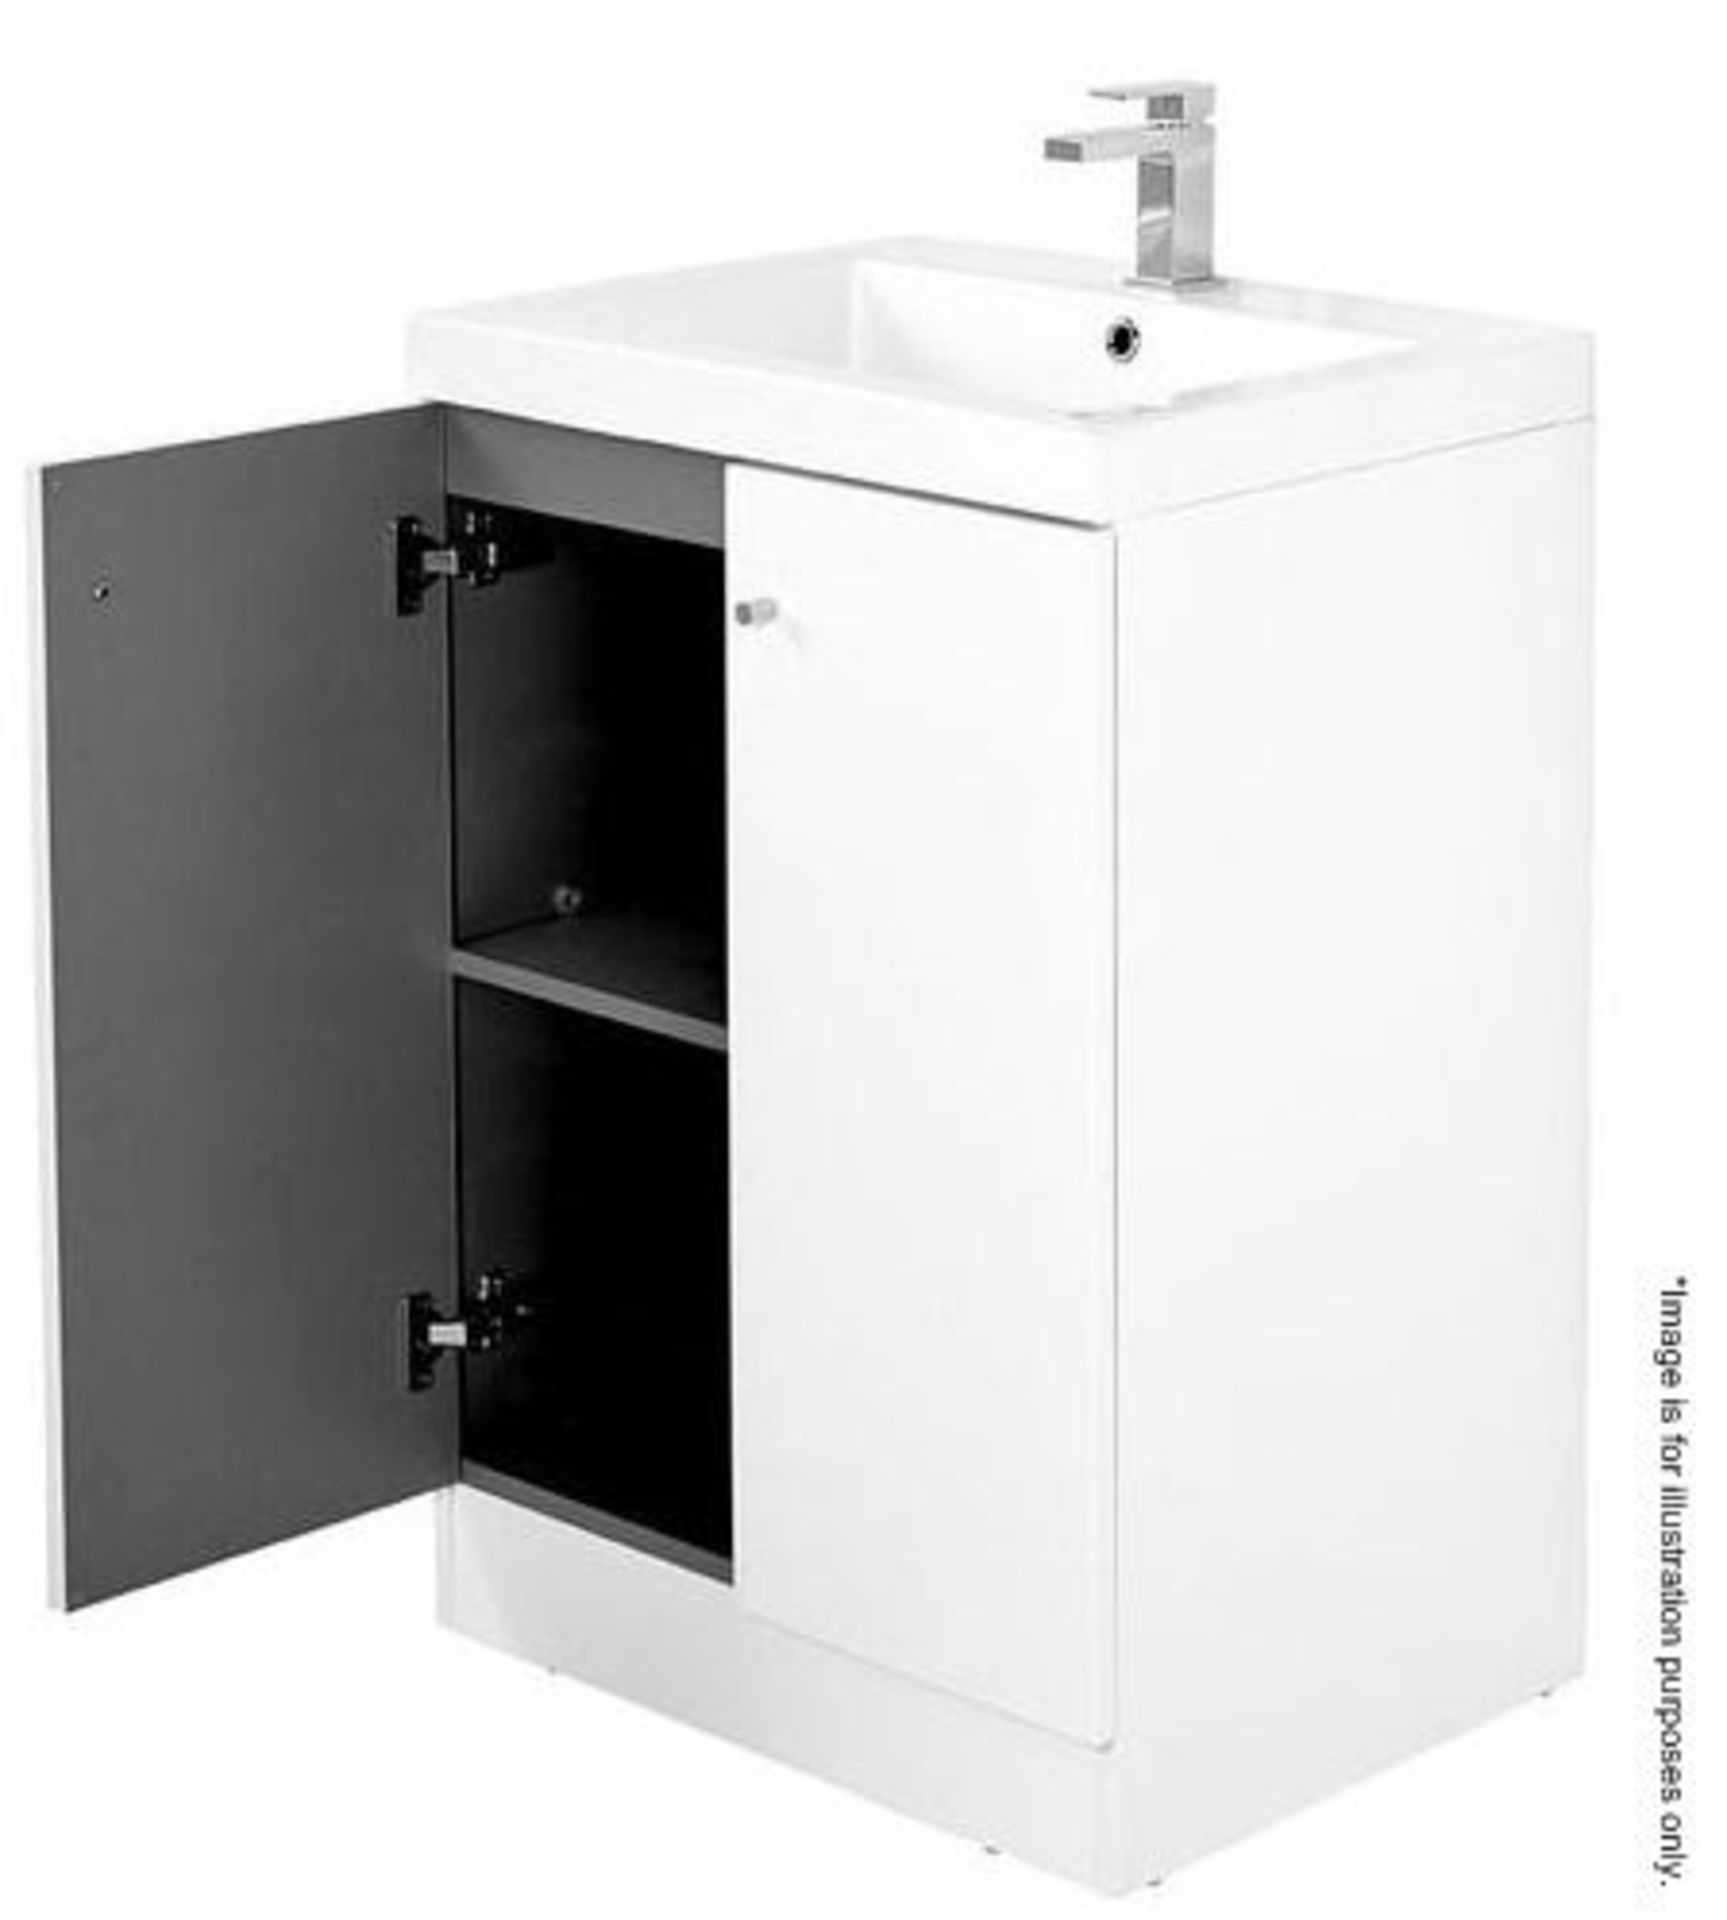 10 x Alpine Duo 600 Floorstanding Vanity Units In Gloss White - Dimensions: H80 x W60 x D45cm - Bran - Image 5 of 5